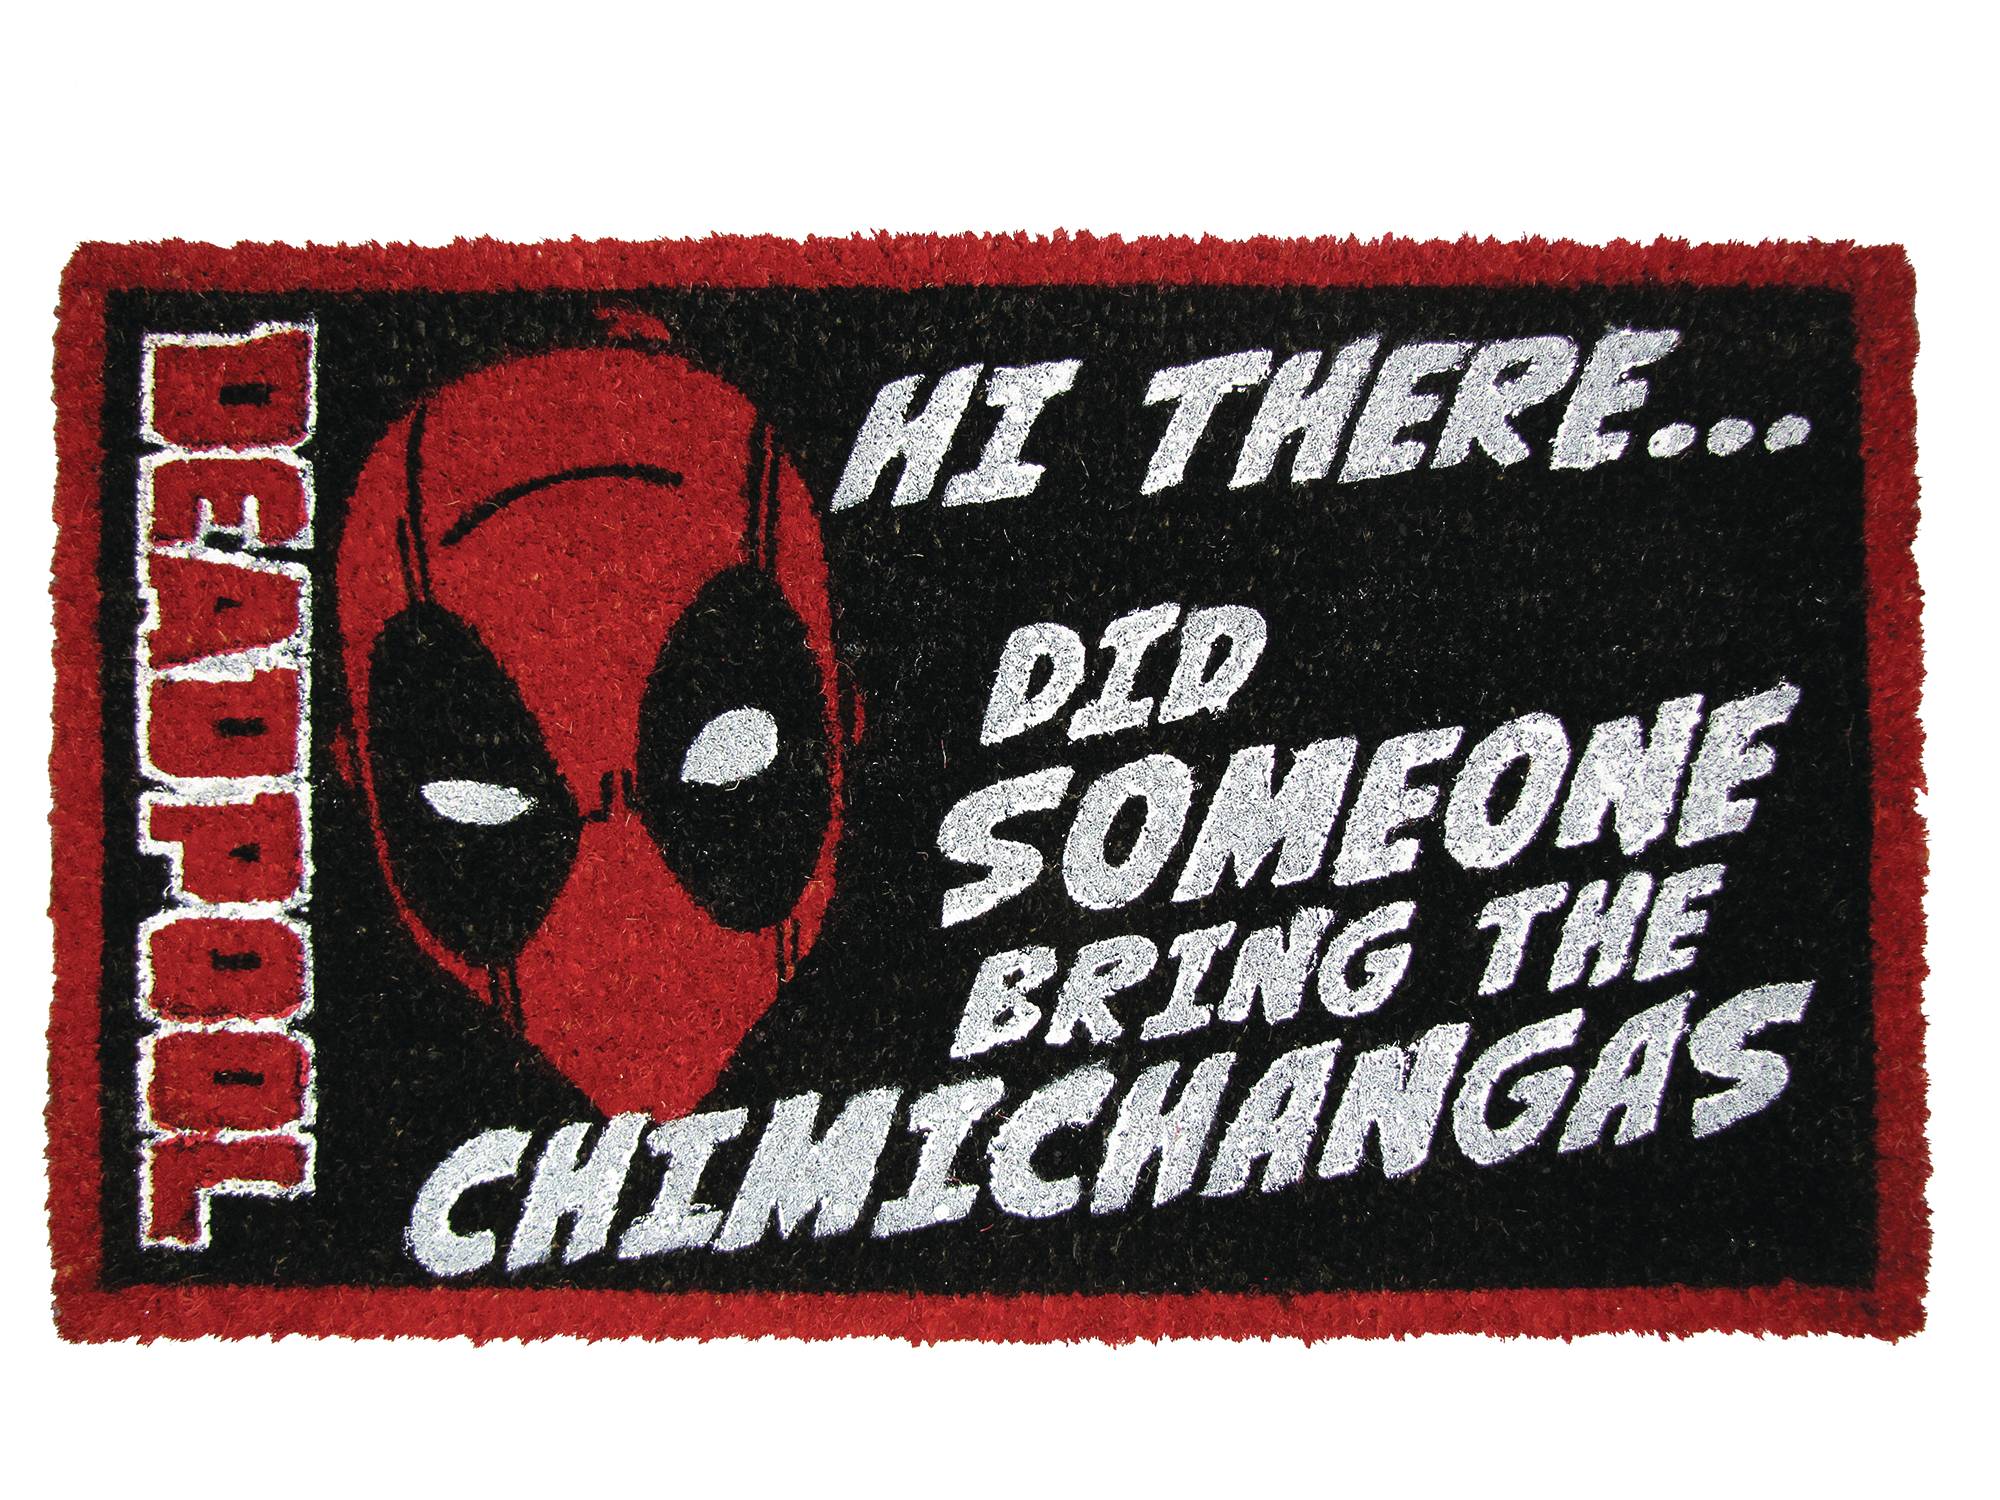 Deadpool's Chimichanga is Enormous